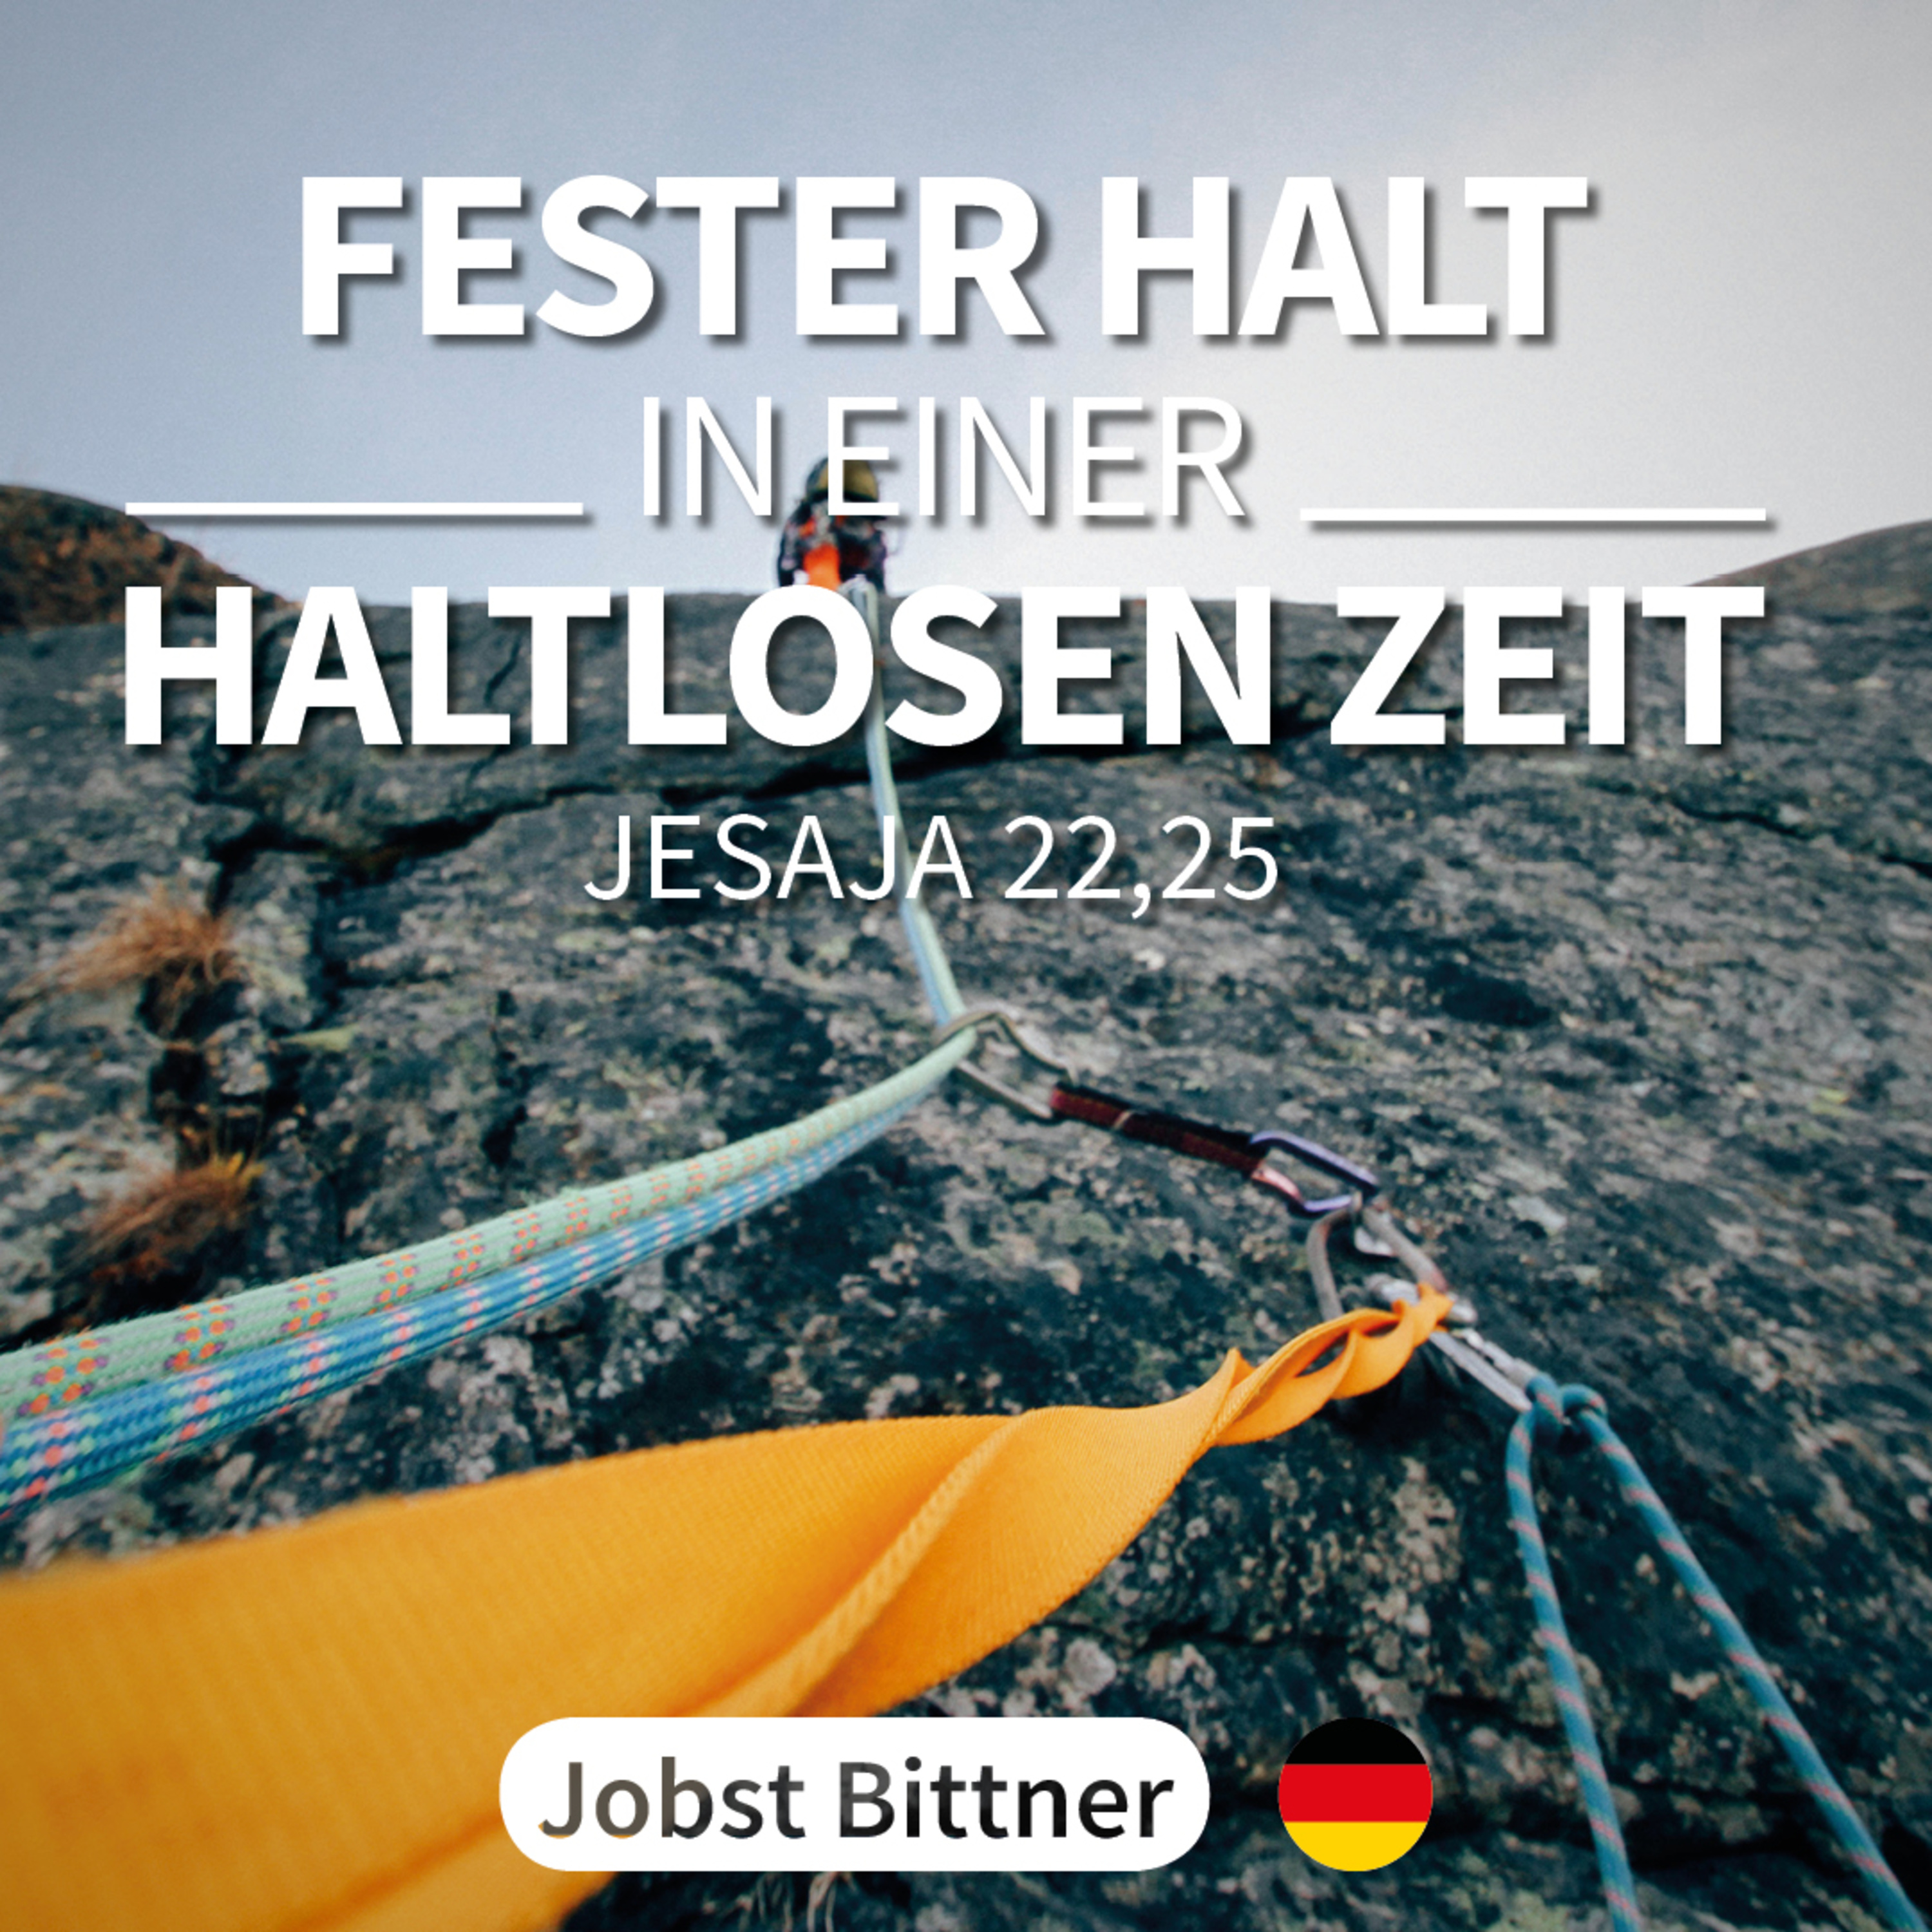 JOBST BITTNER - Fester Halt in einer haltlosen Zeit [Jes 22,25] hero artwork